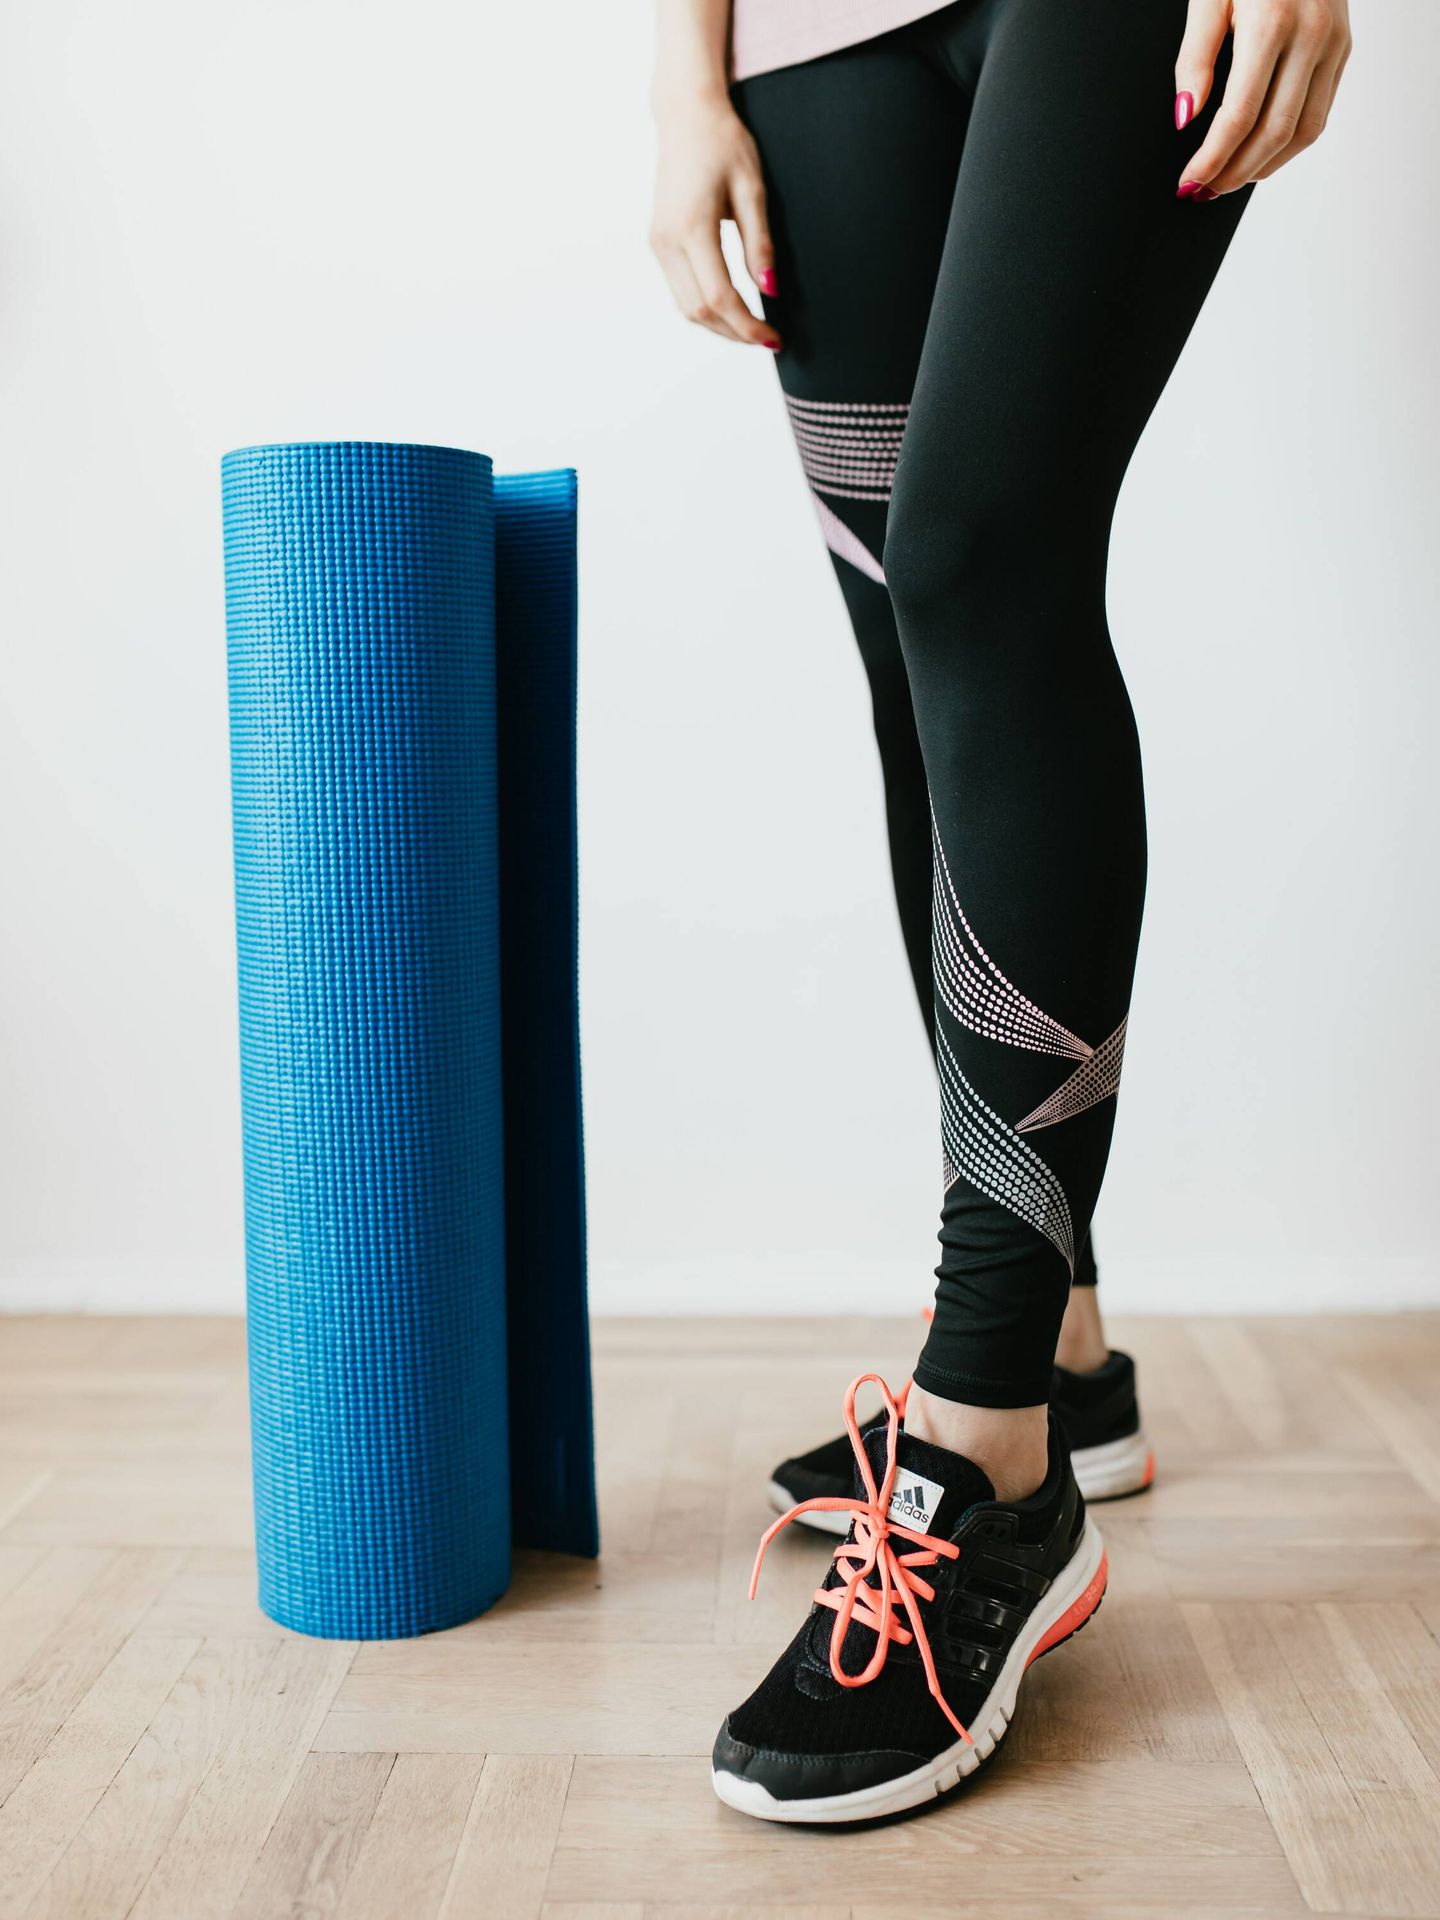 Ejercicios físicos para fortalecer los huesos. (Pexels/Karolina Grabowska)